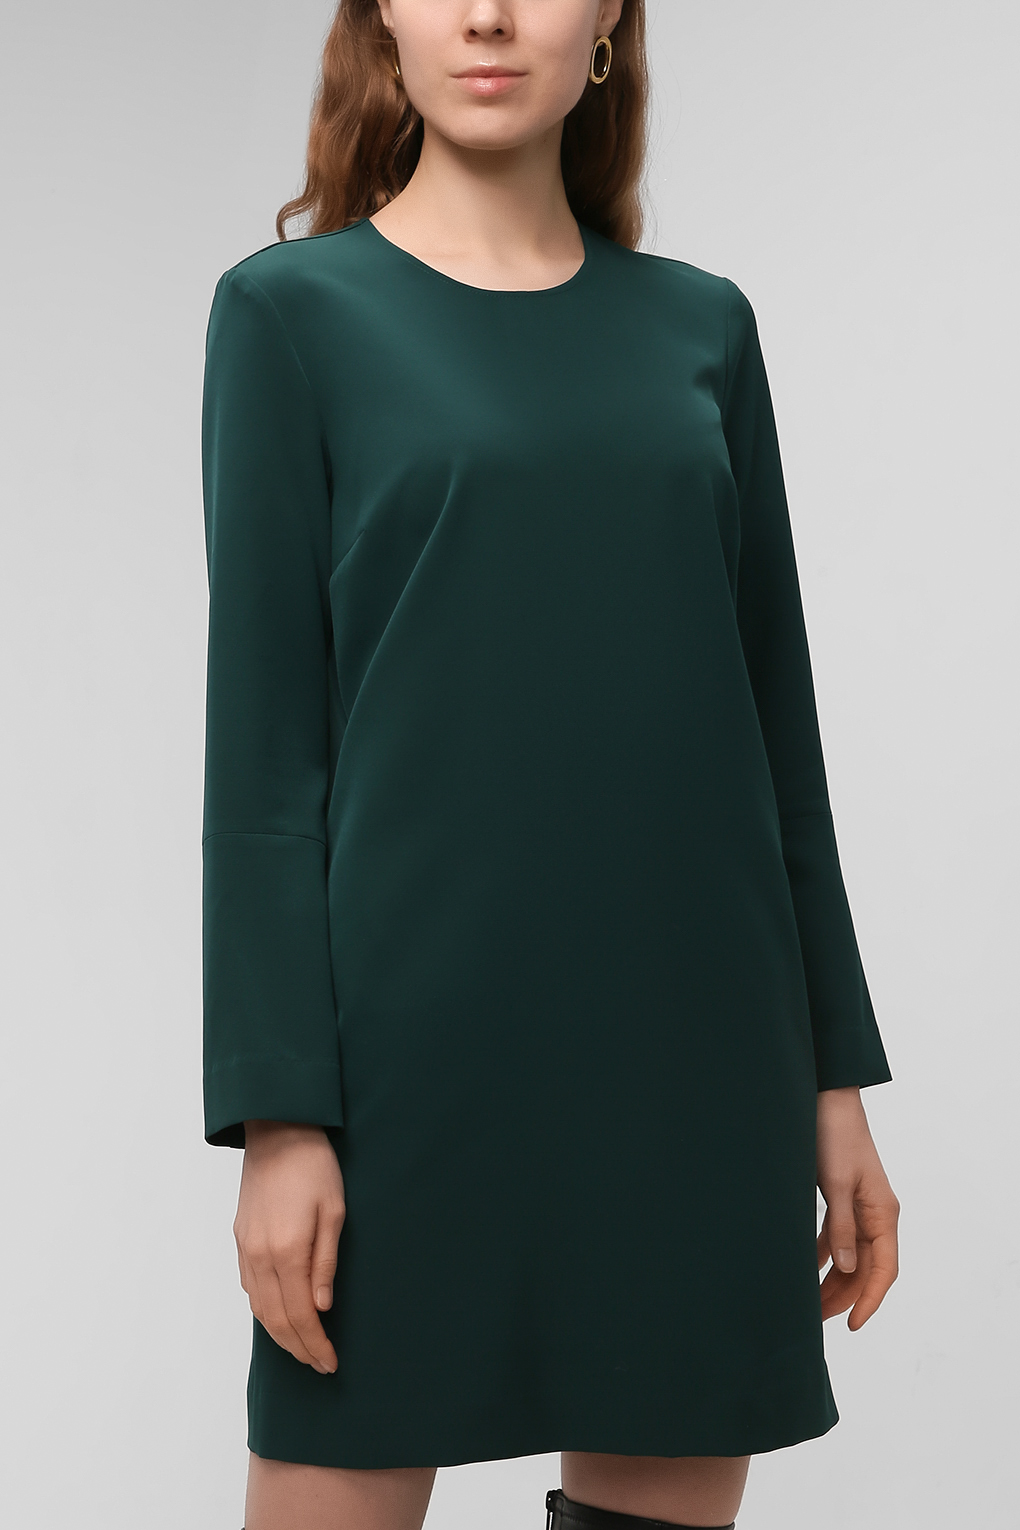 Платье женское PAOLA RAY PR221-3069 зеленое XS